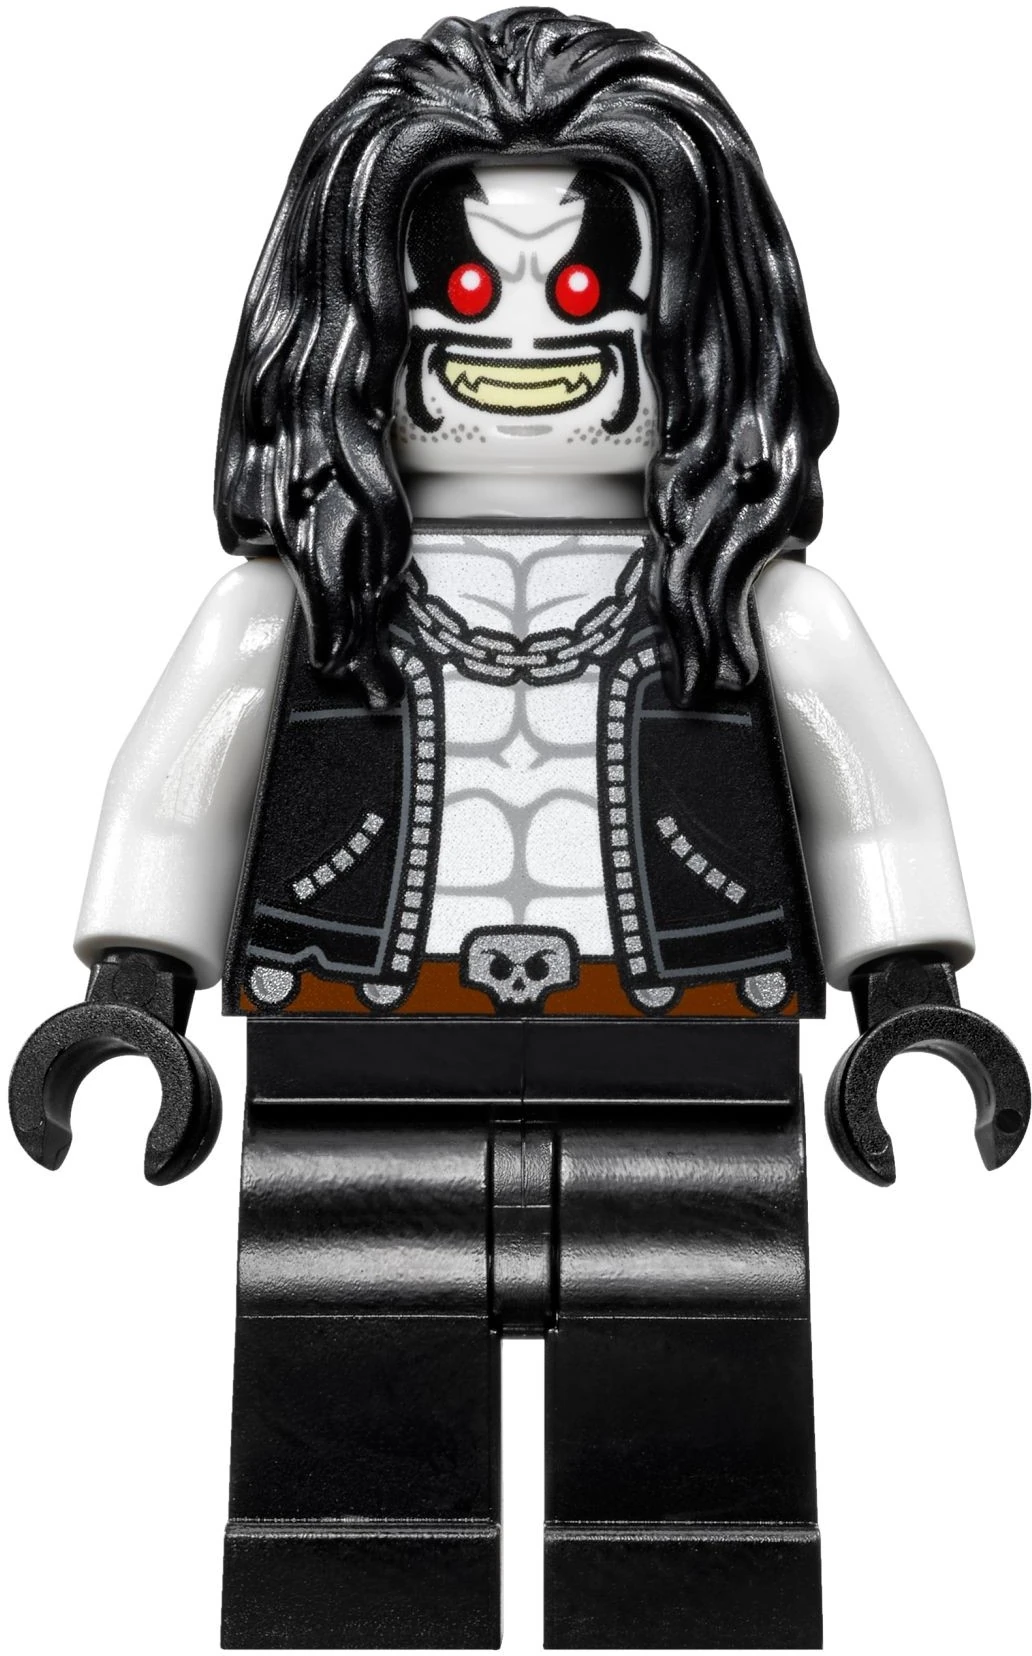 Black Adam - Brickipedia, the LEGO Wiki